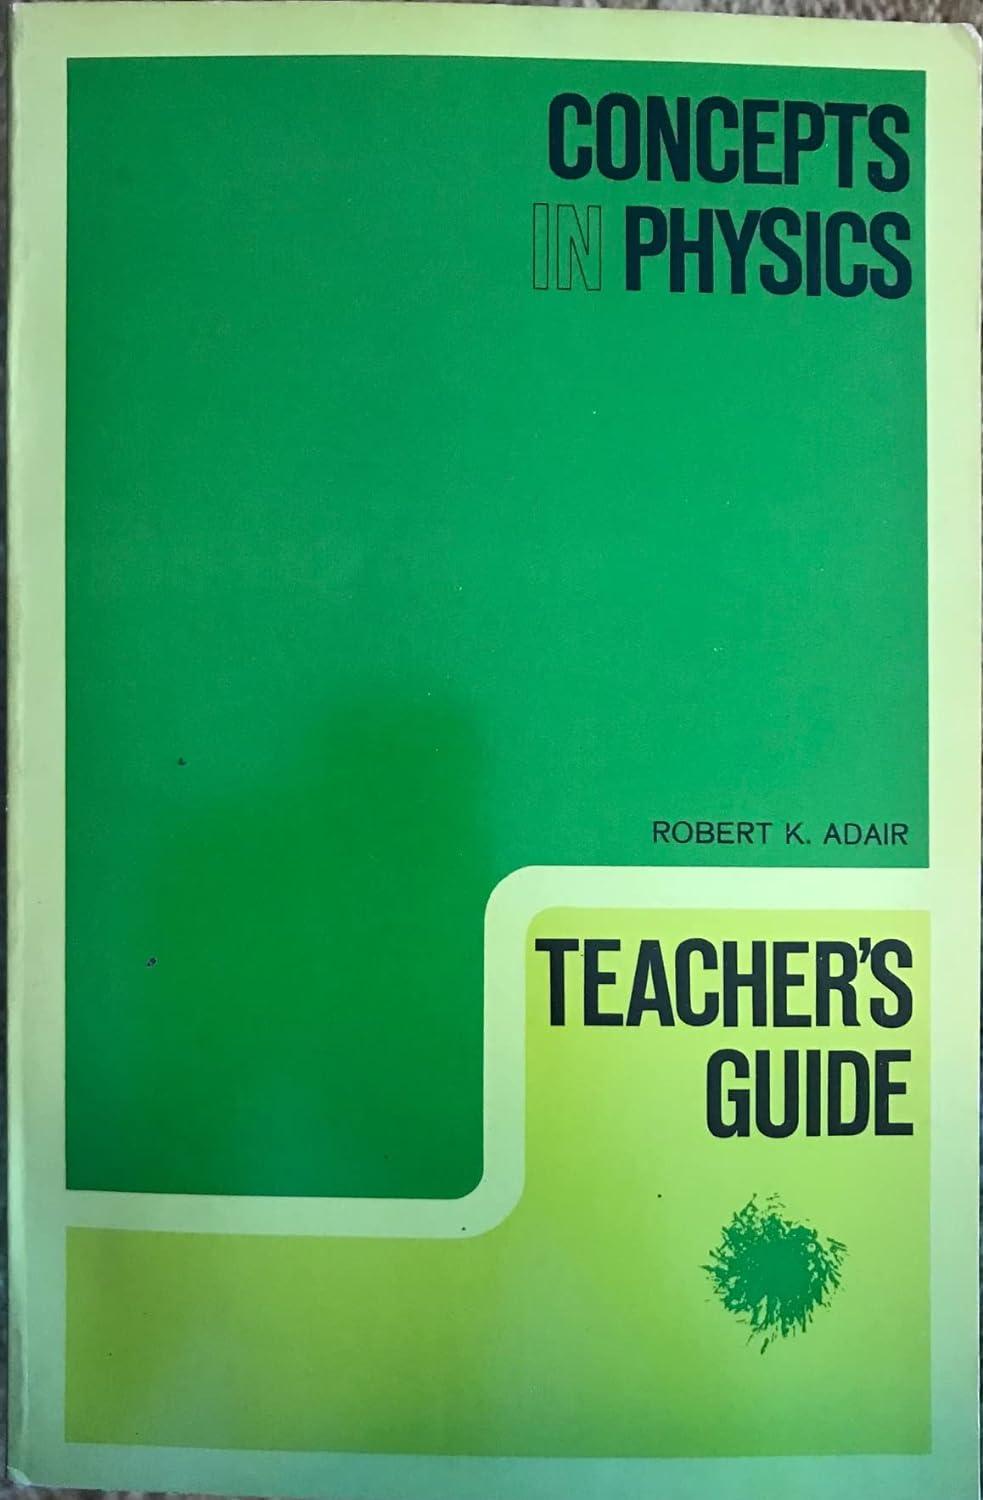 concepts in physics teachers guide 1st edition robert adair 0120440563, 978-0120440566